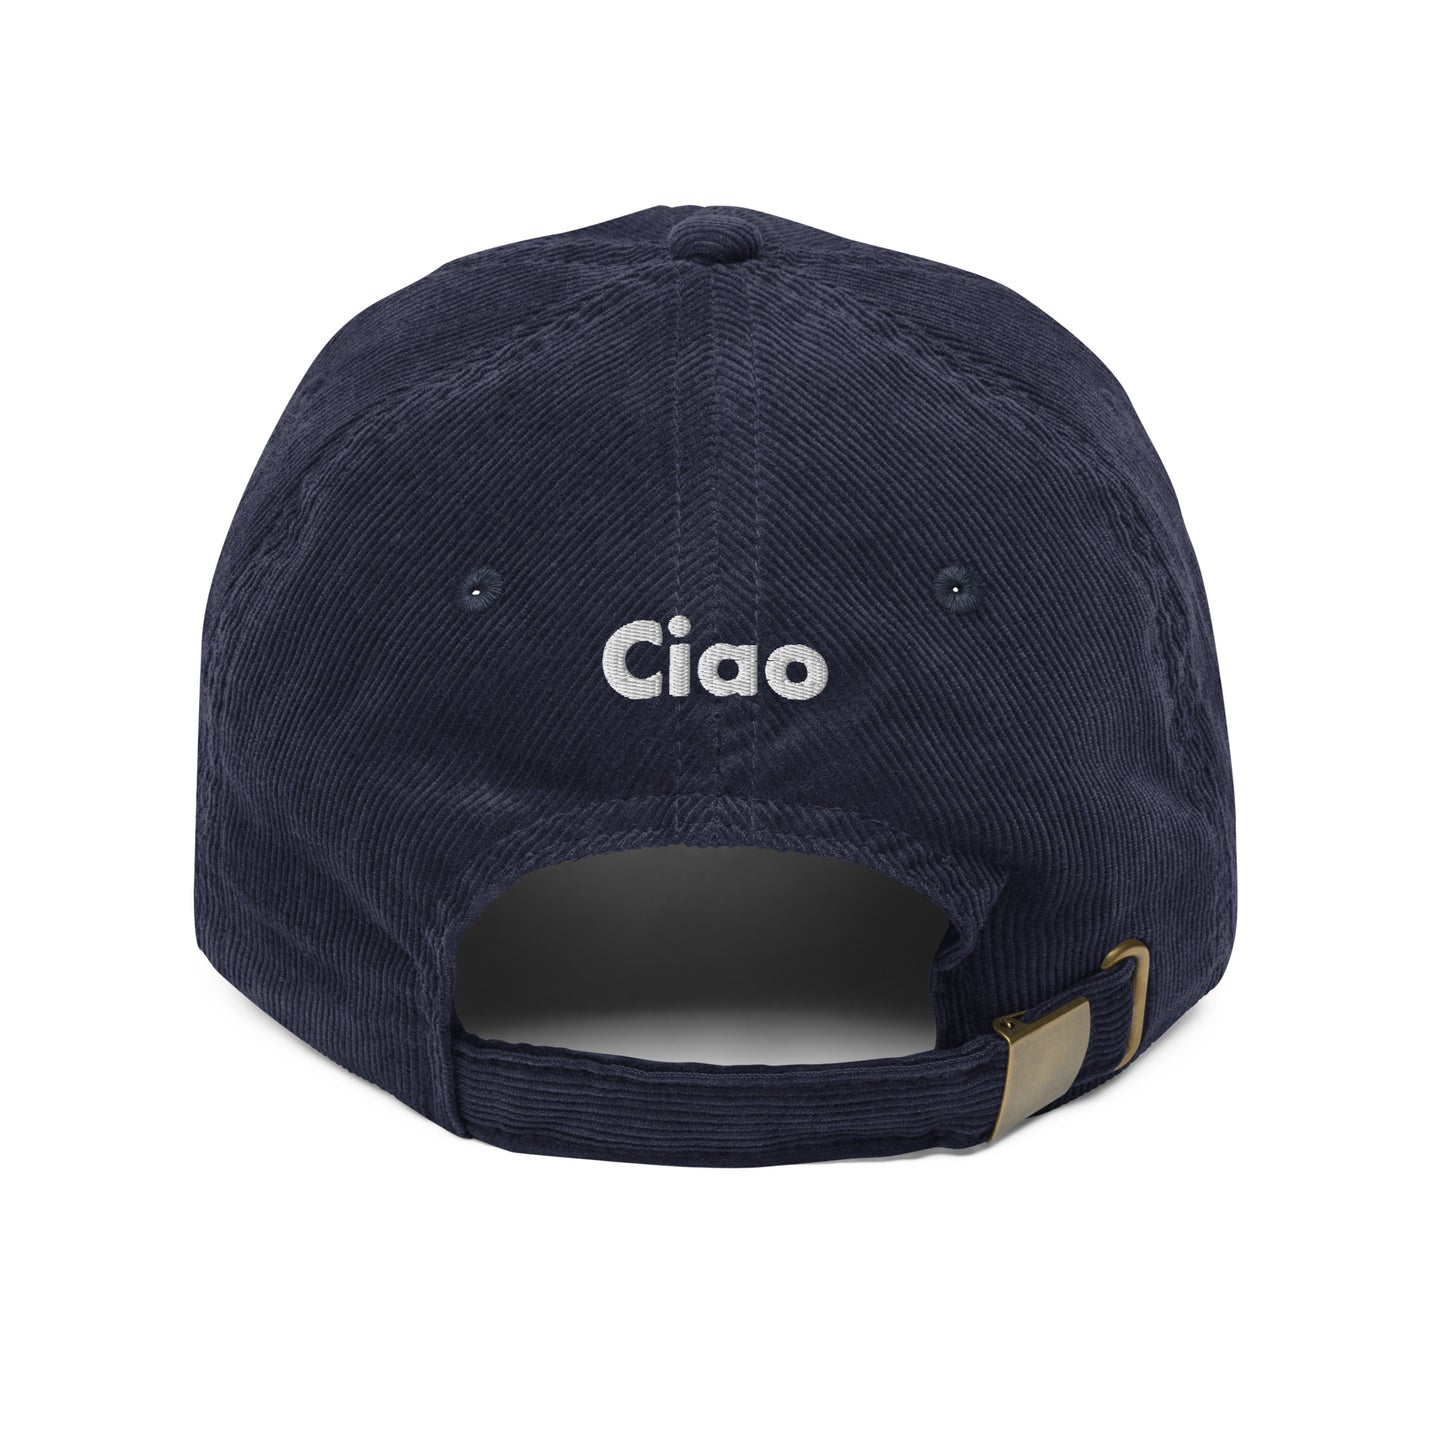 Hi Ciao Corduroy Hat